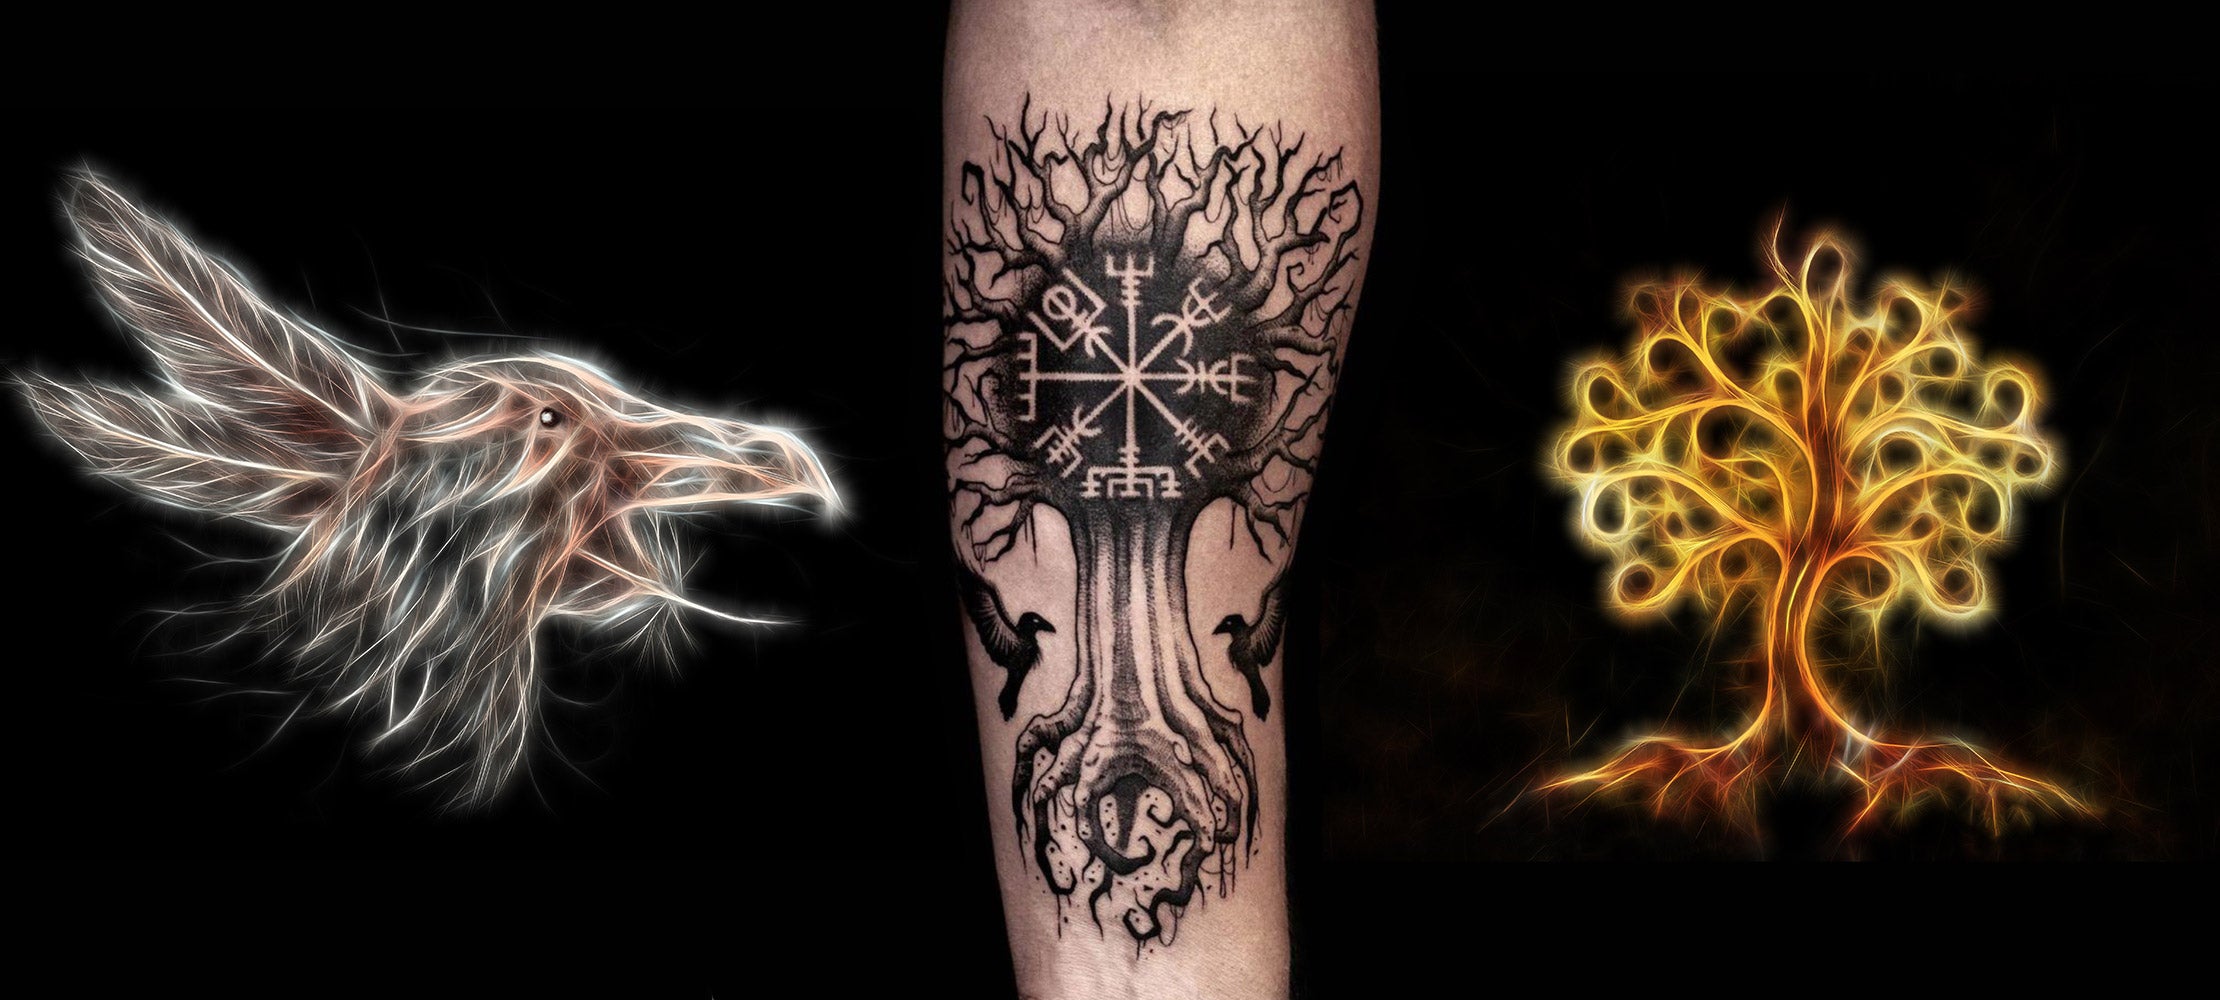 Celtic Viking Tattoo by Maizy138 on DeviantArt